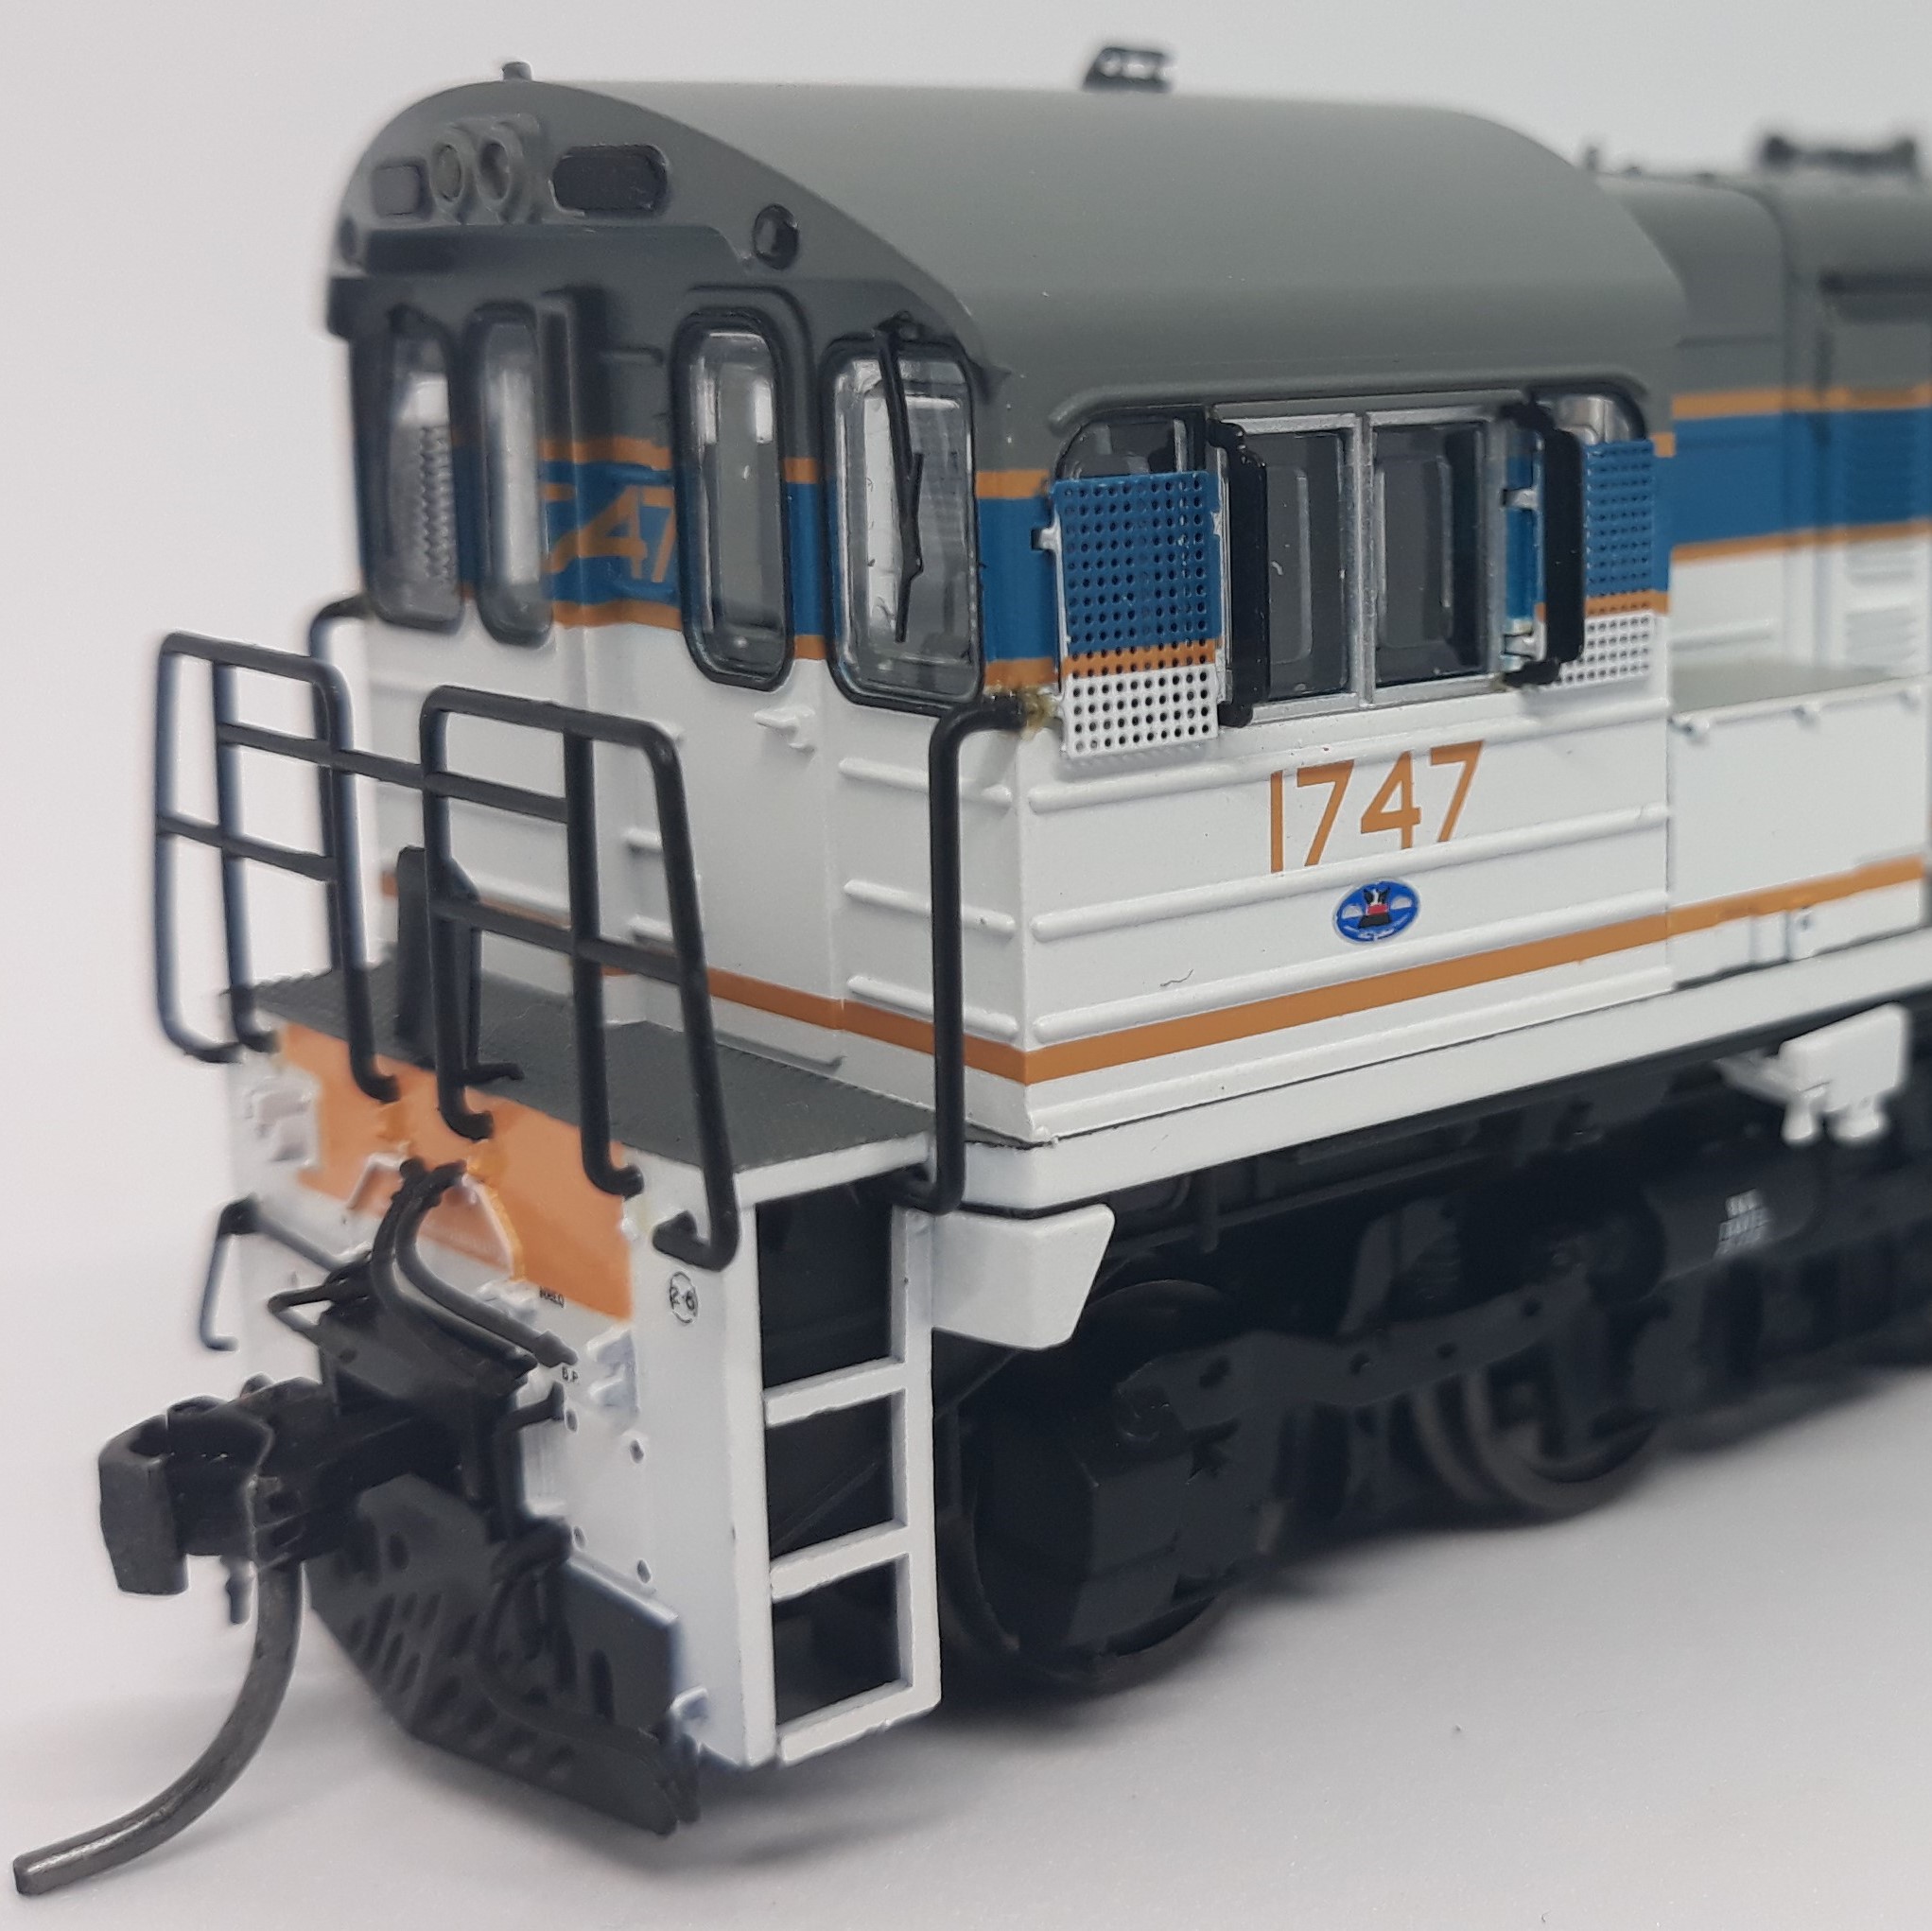 RTR044 1720 Class Locomotive #1747 HOn3½